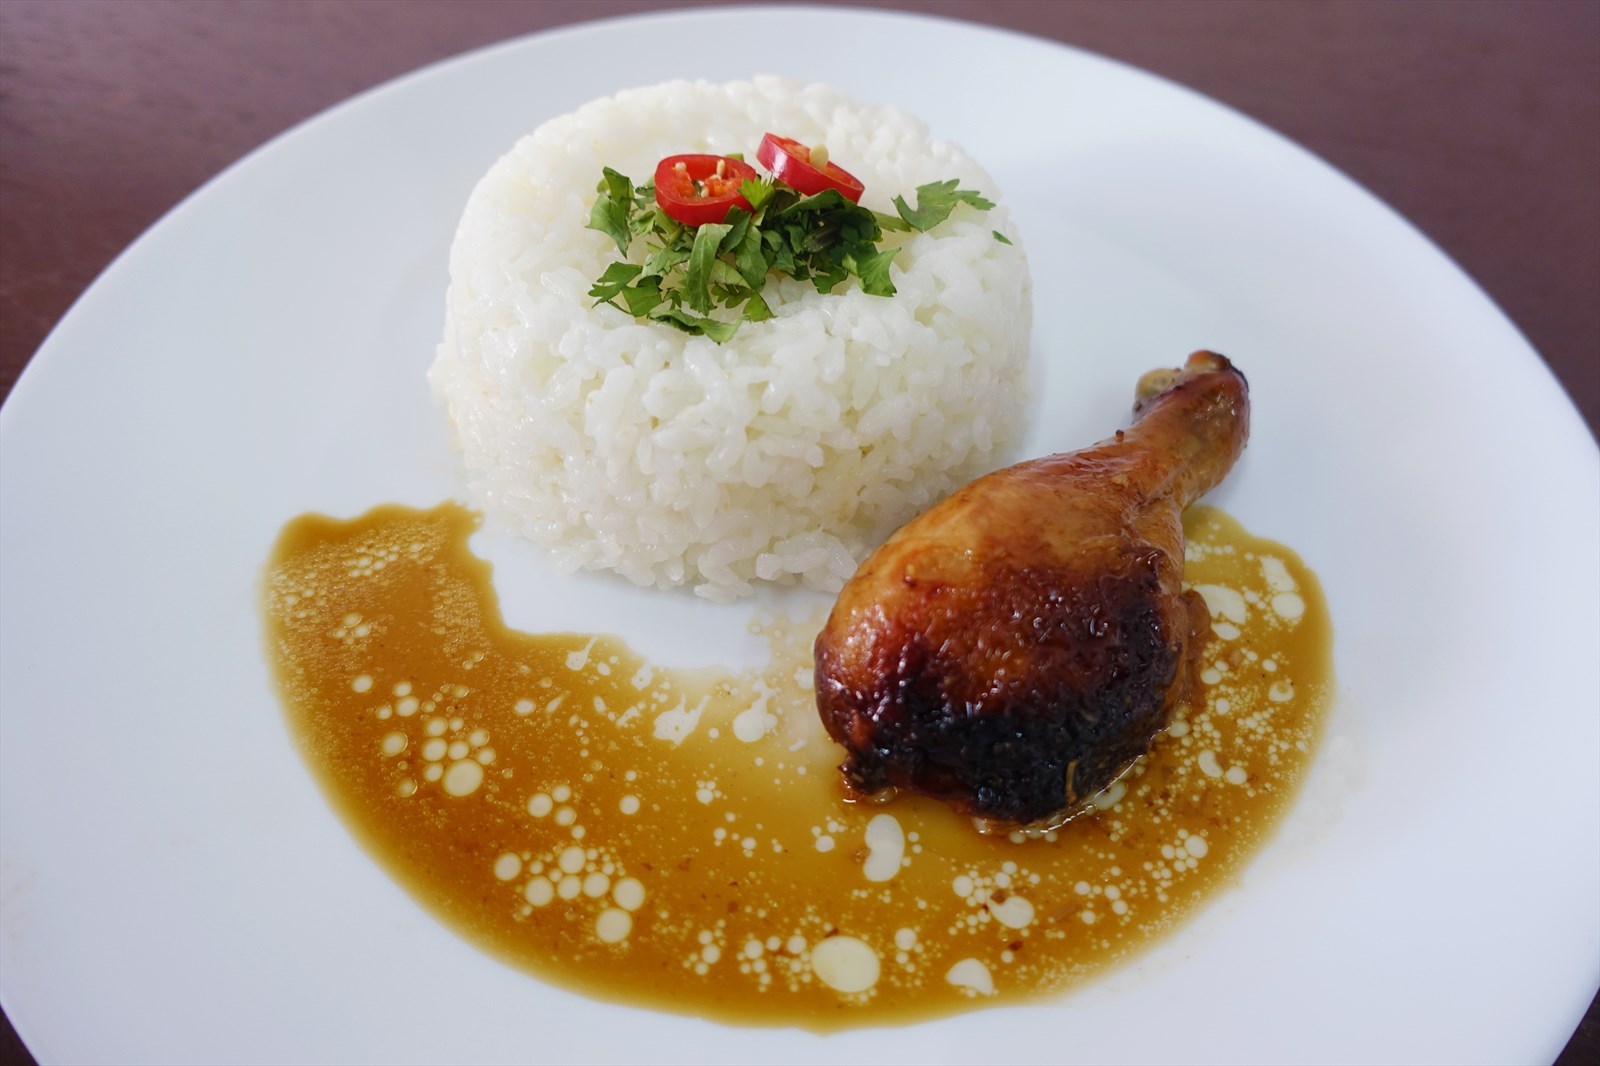 Chakey's Serangoon Salt Baked Chicken with Rice